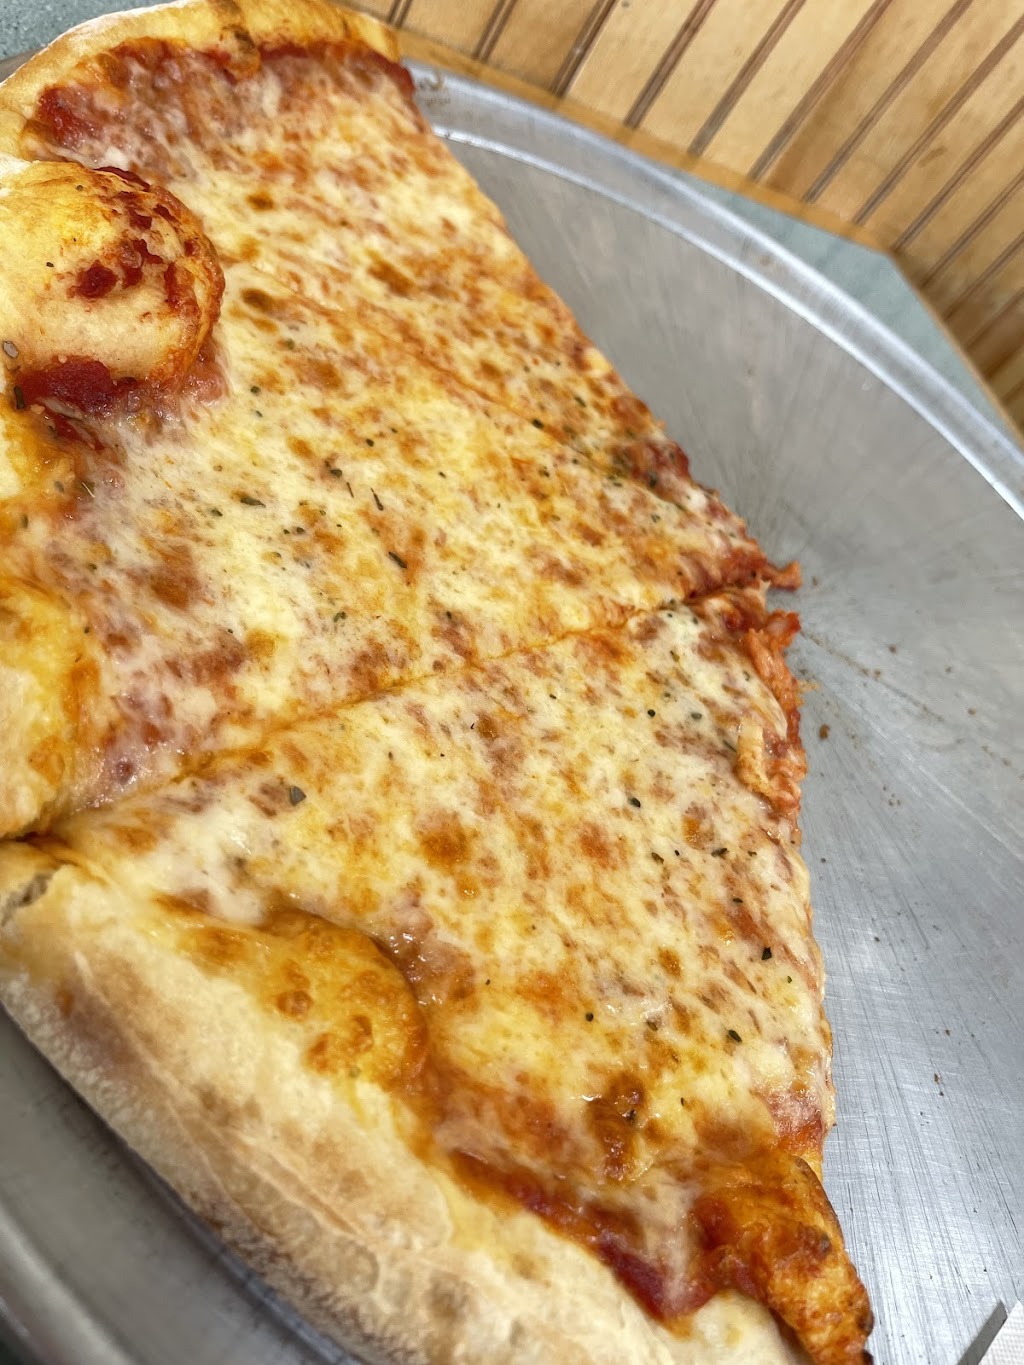 Sals Bravo Pizza of Limerick | 5 Kugler Rd, Limerick, PA 19468 | Phone: (610) 495-8242